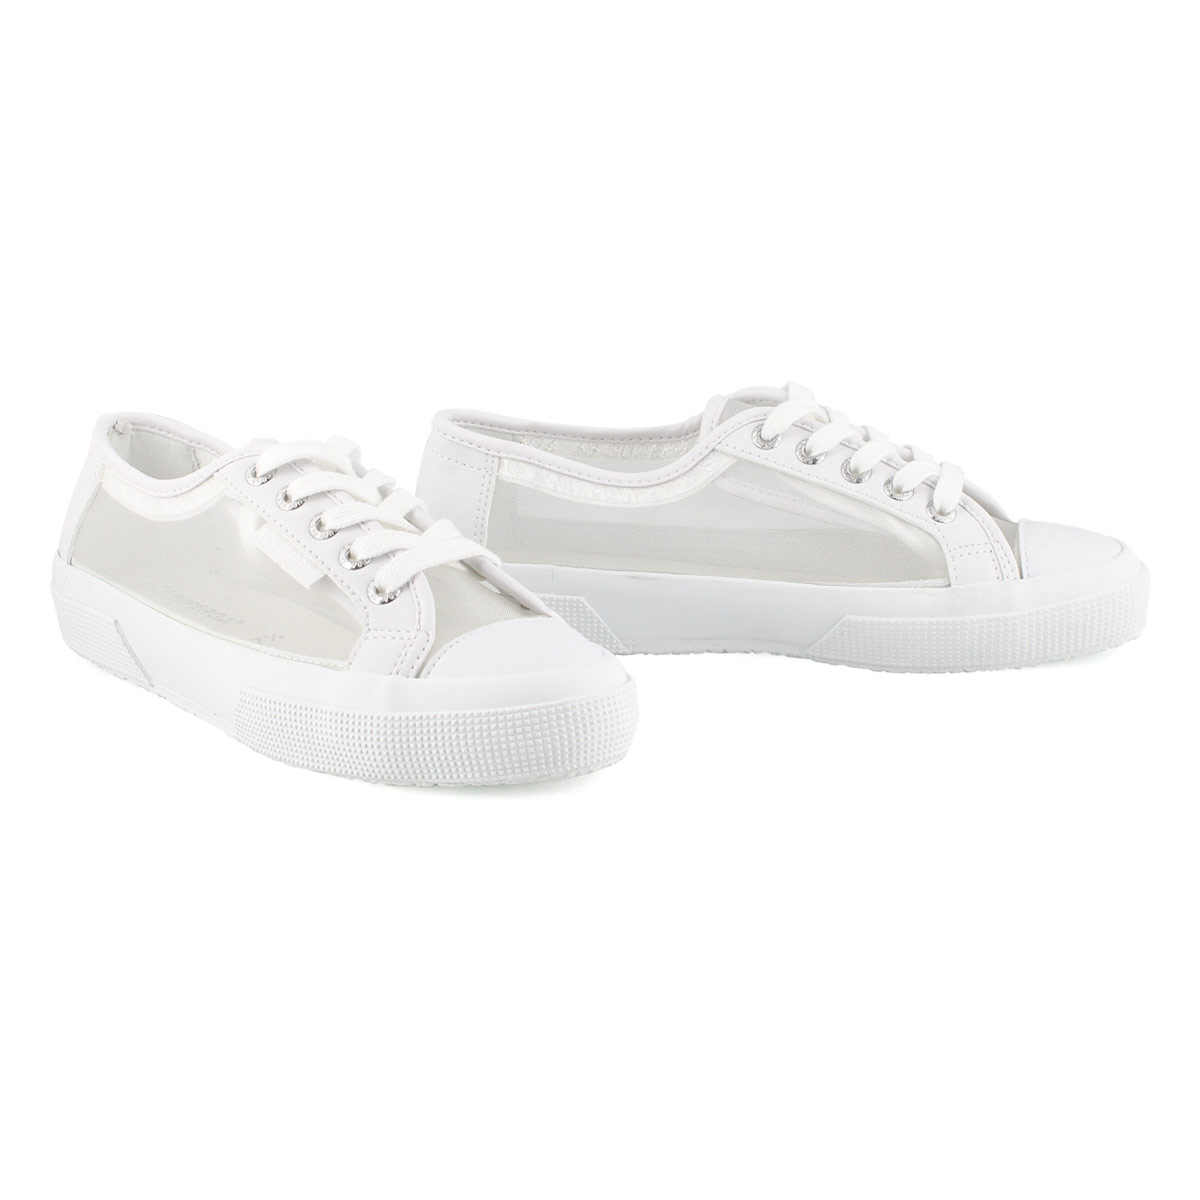 Superga Women's Cotu Mesh Sneaker - White | SoftMoc.com